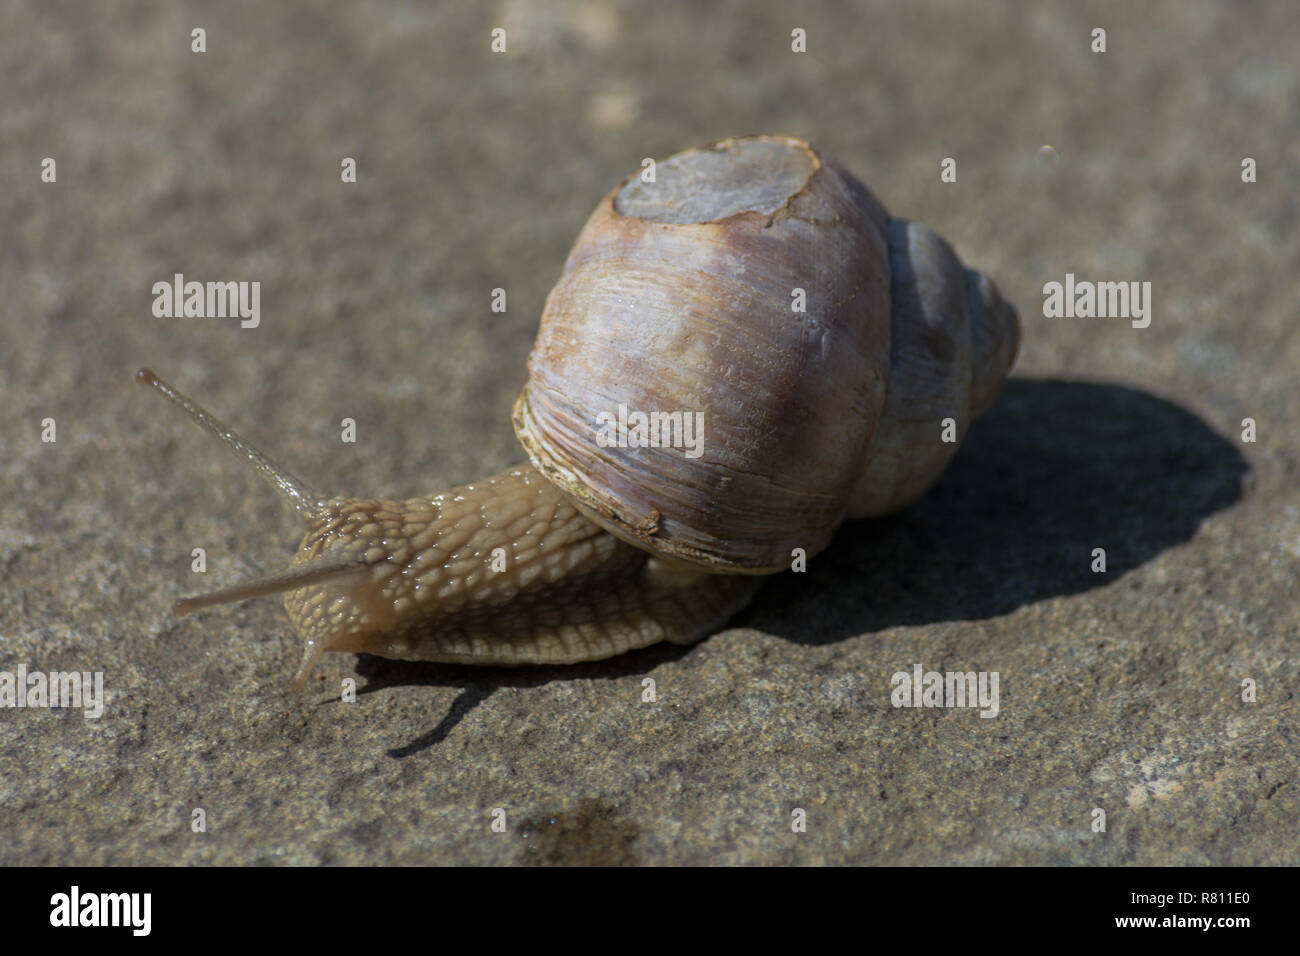 Roman snail - Helix pomatia. Helix pomatia, common names of the Romans, Burgundians, slug with injured casings Stock Photo